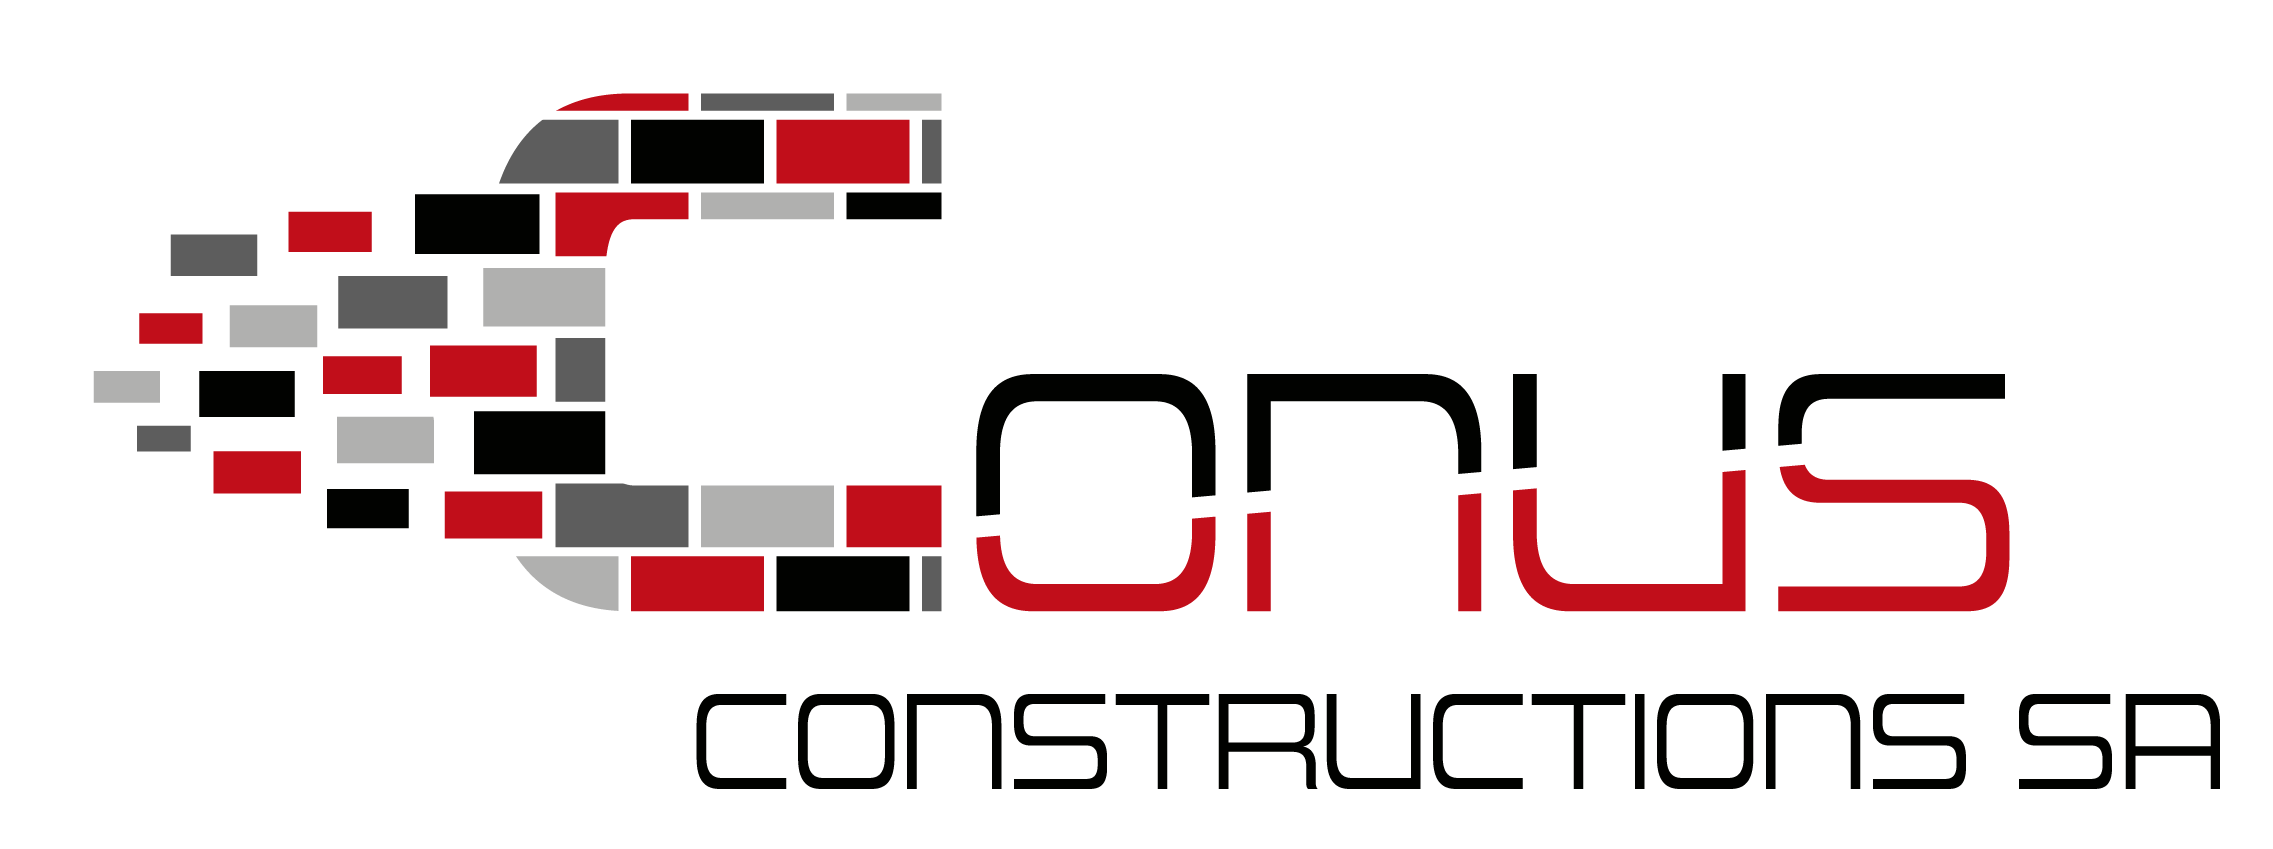 Conus_Construction.png